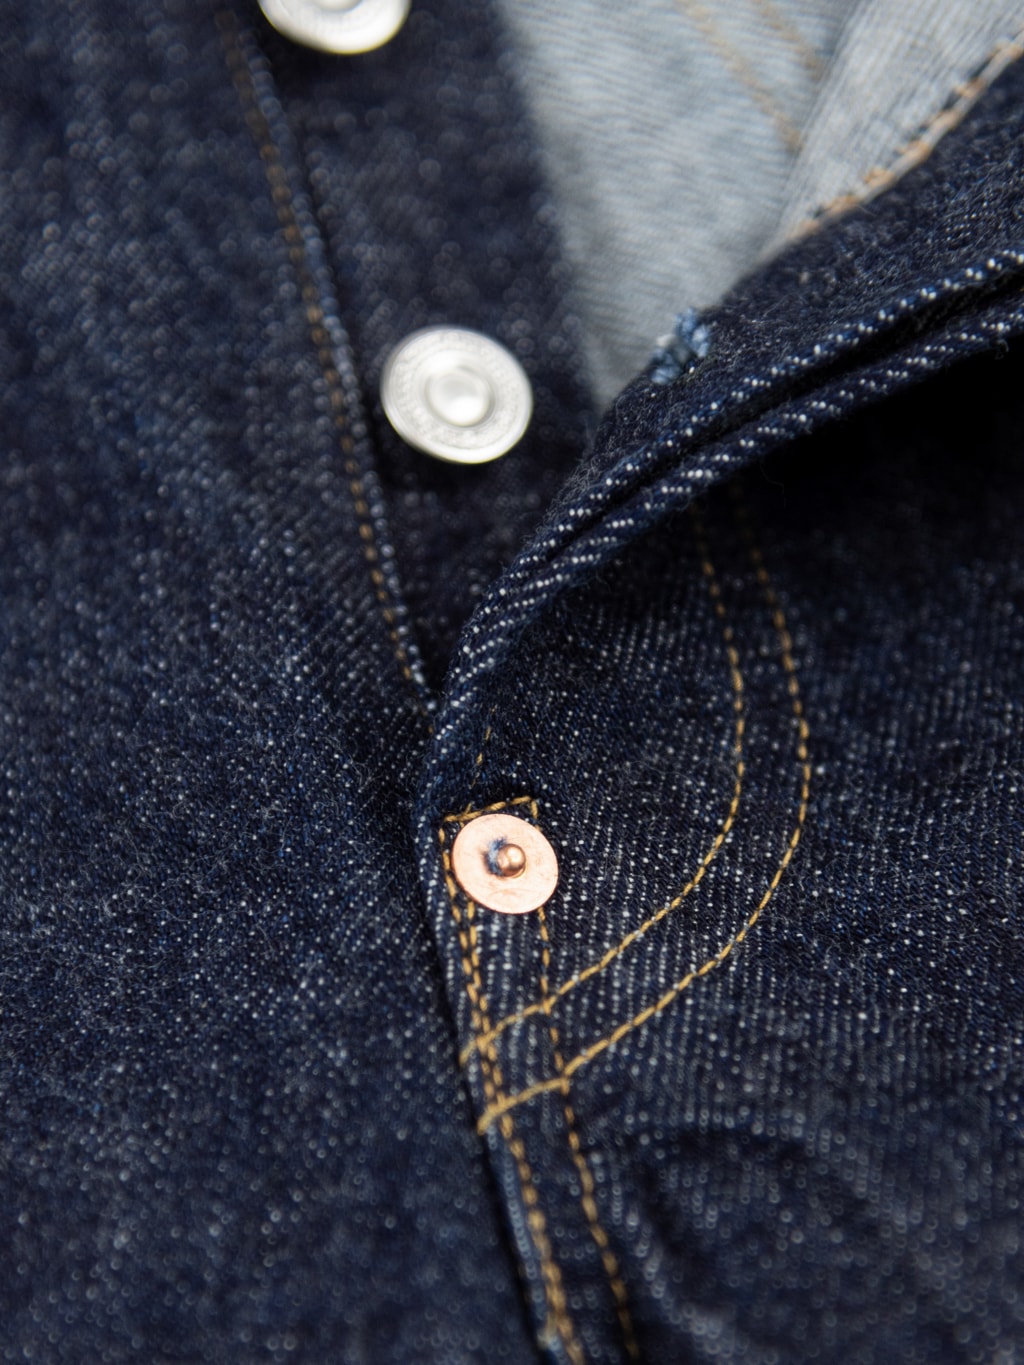 TCB 20s indigo Jeans one wash vintage style rivet detail